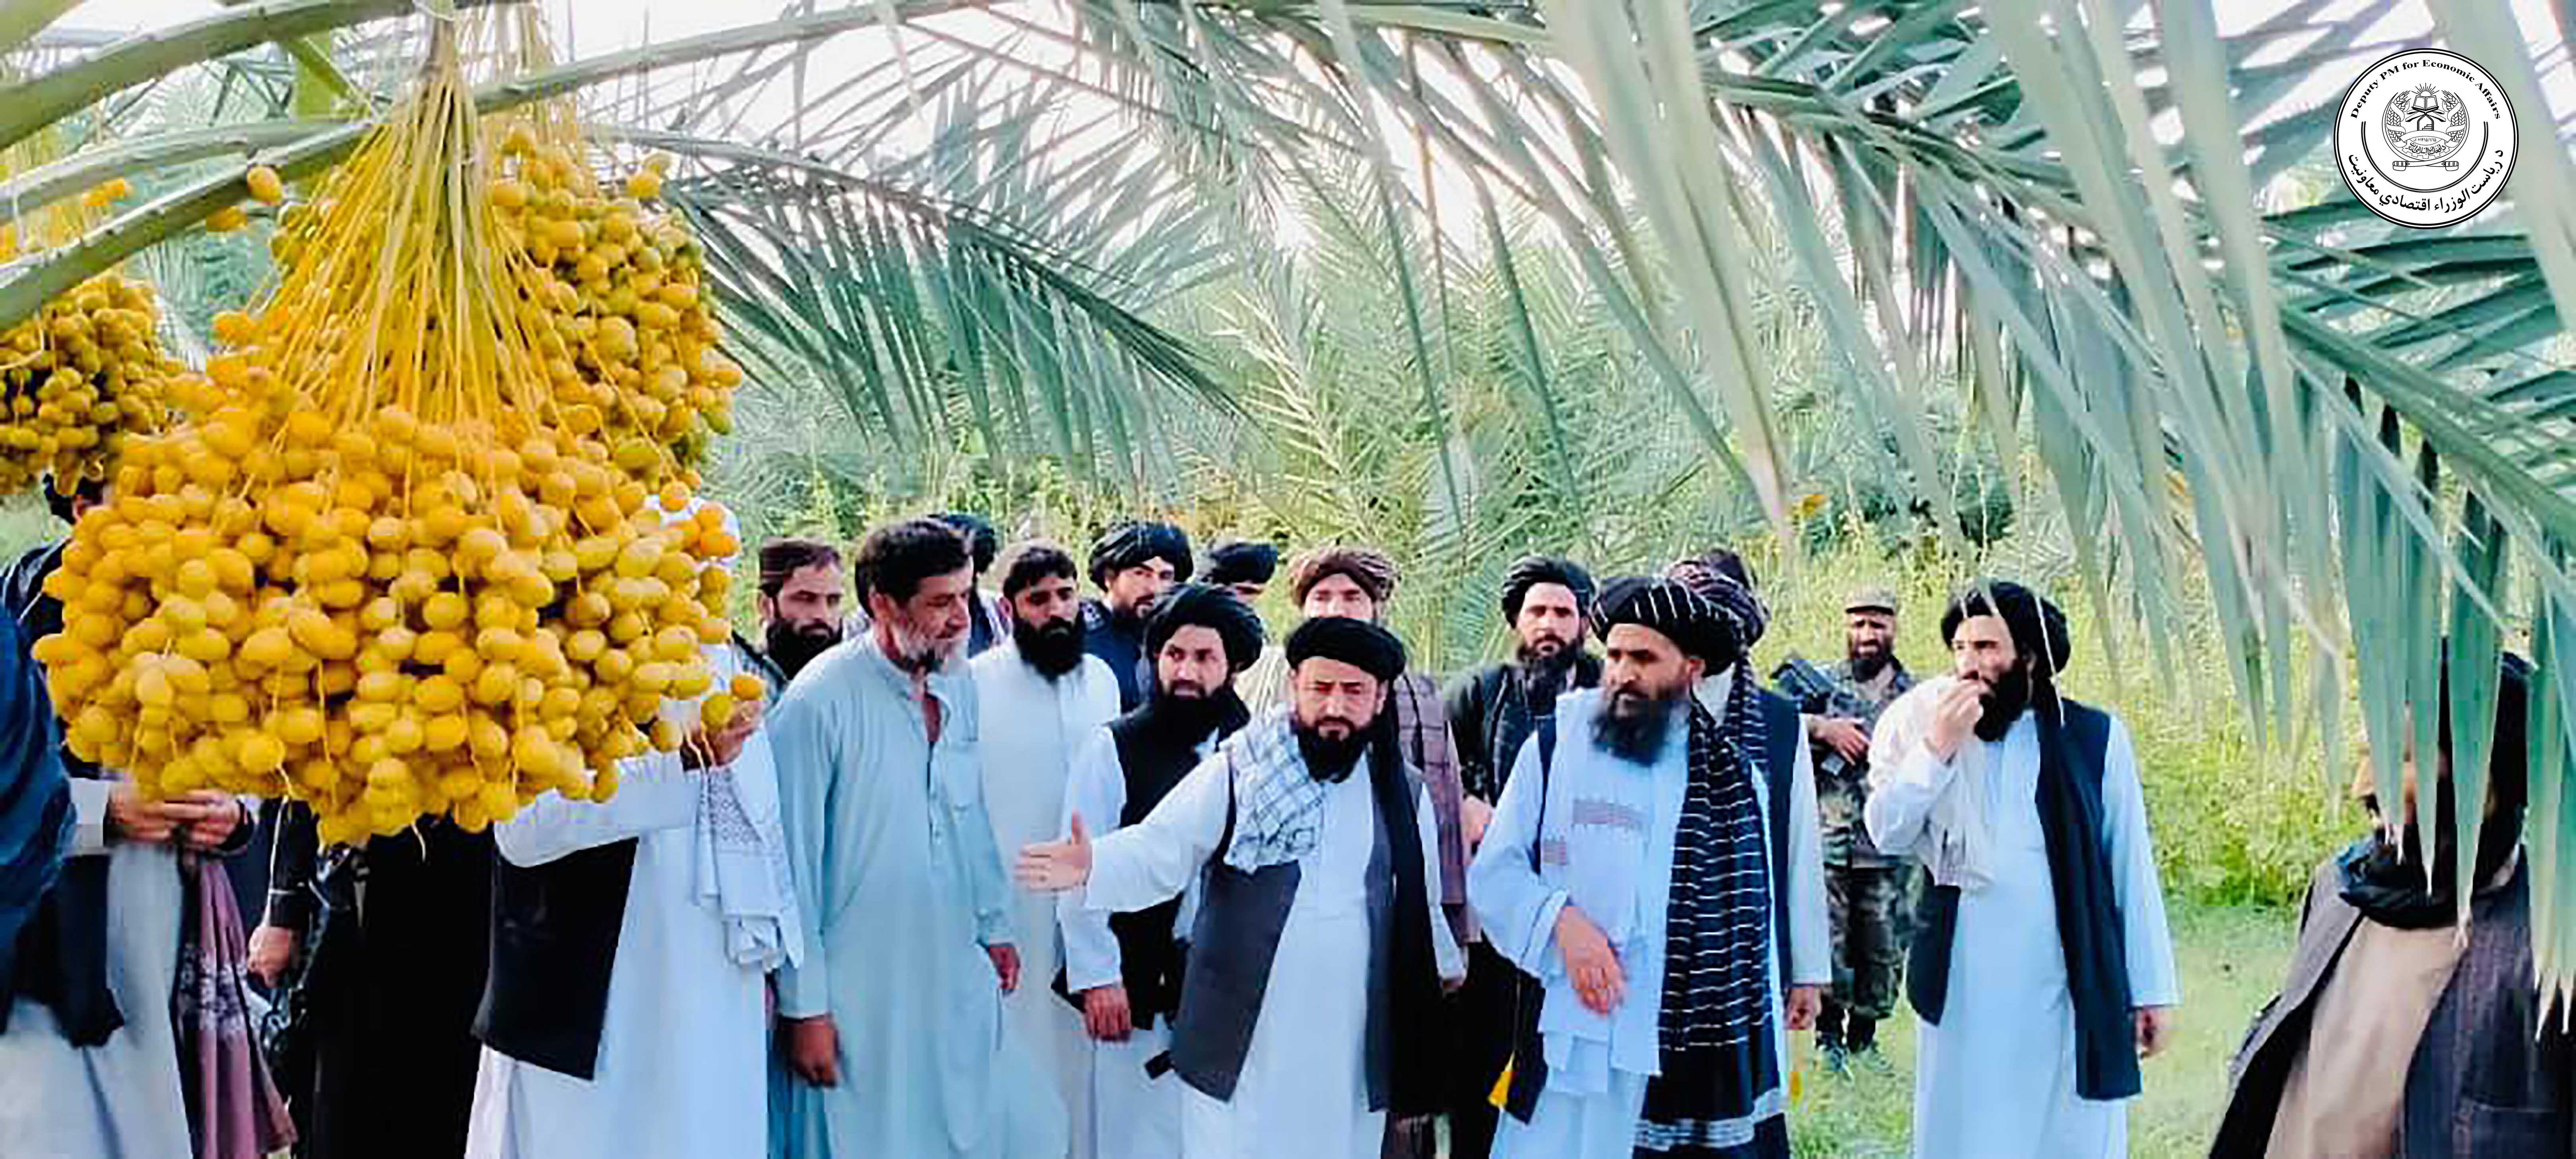 Hajji Mullah Abdul Ghani Beradar Akhund visited the Nangarhar Canal project